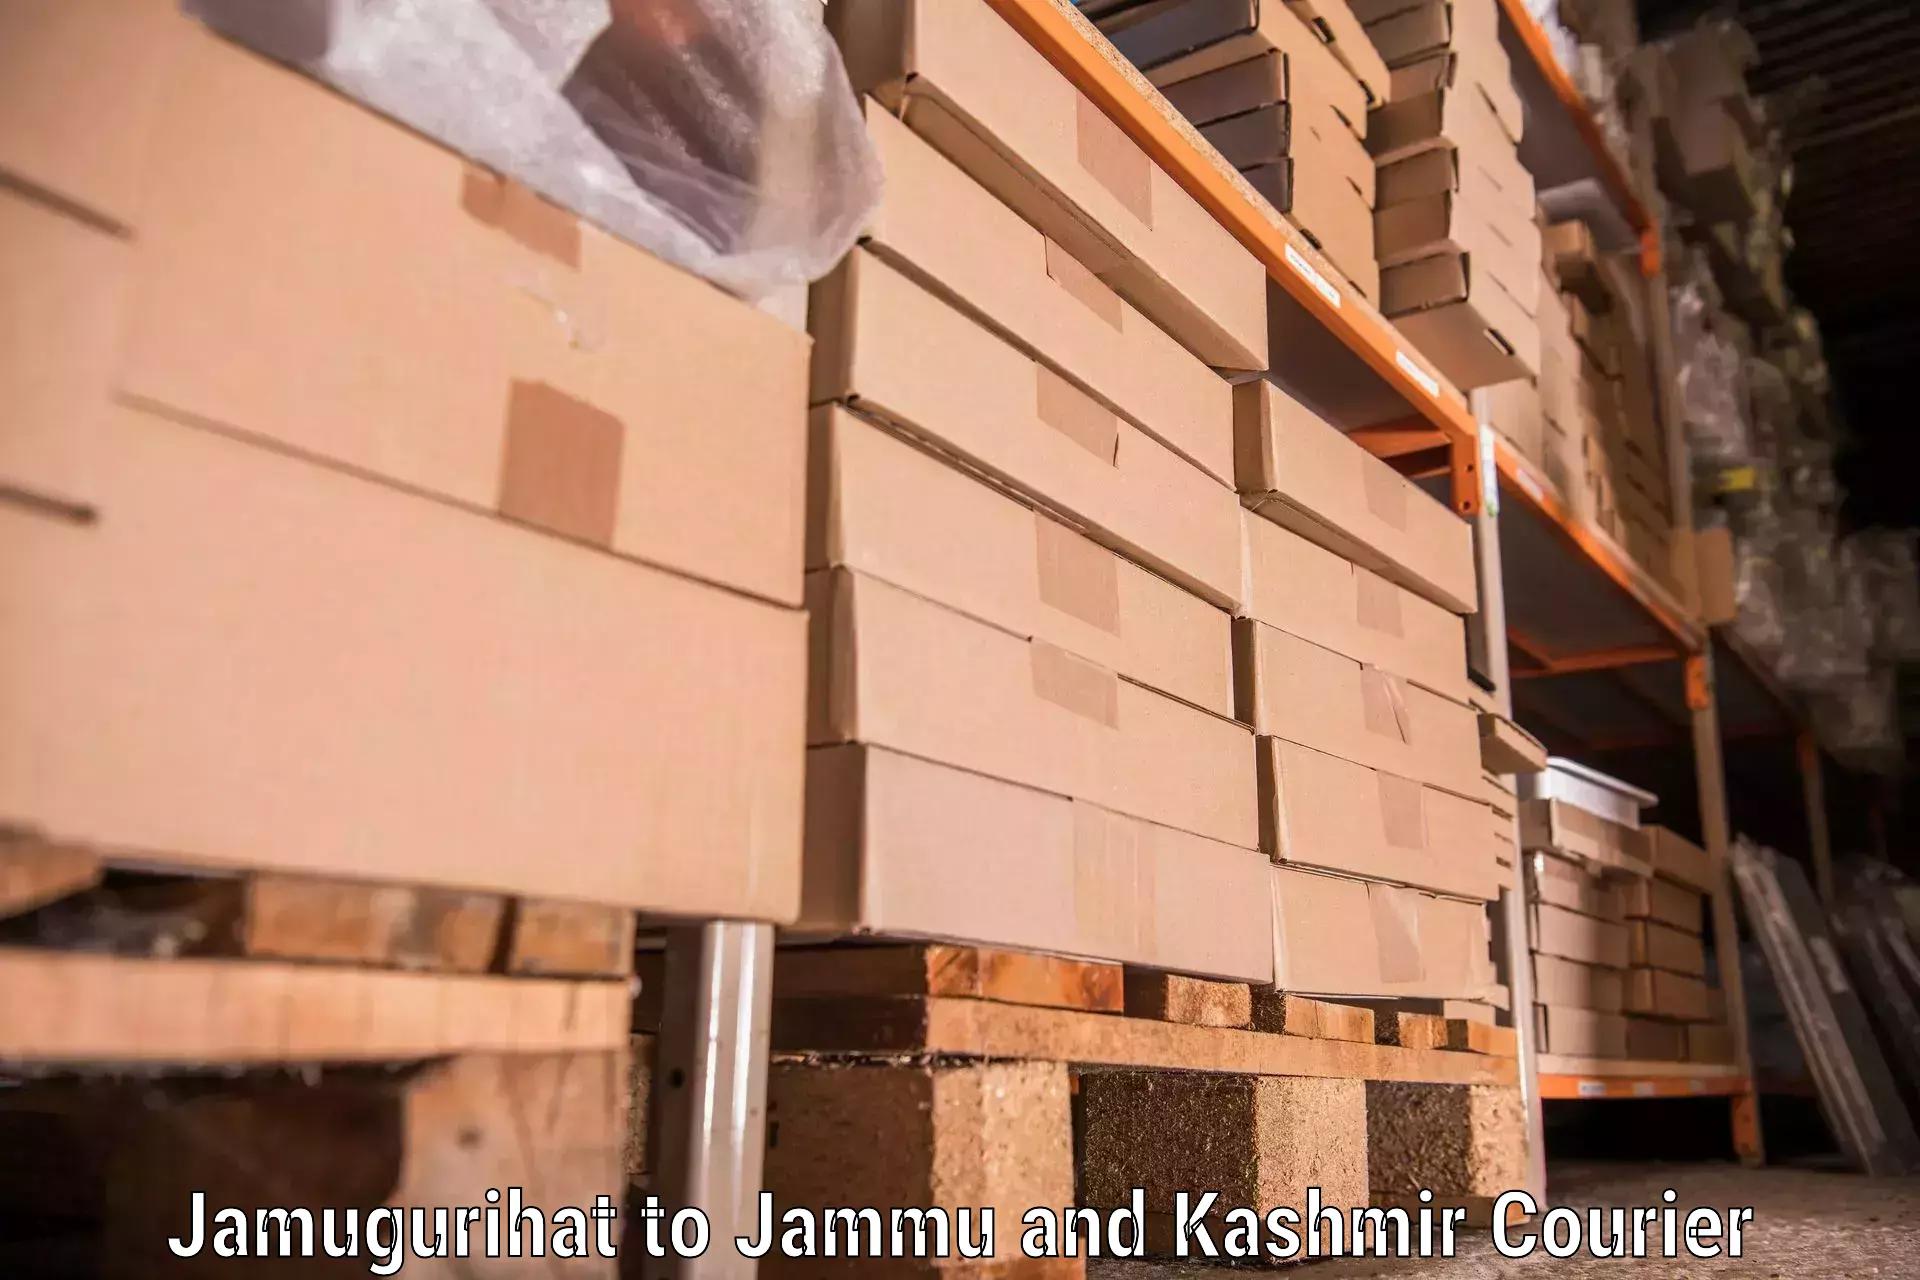 Professional moving company Jamugurihat to Pulwama